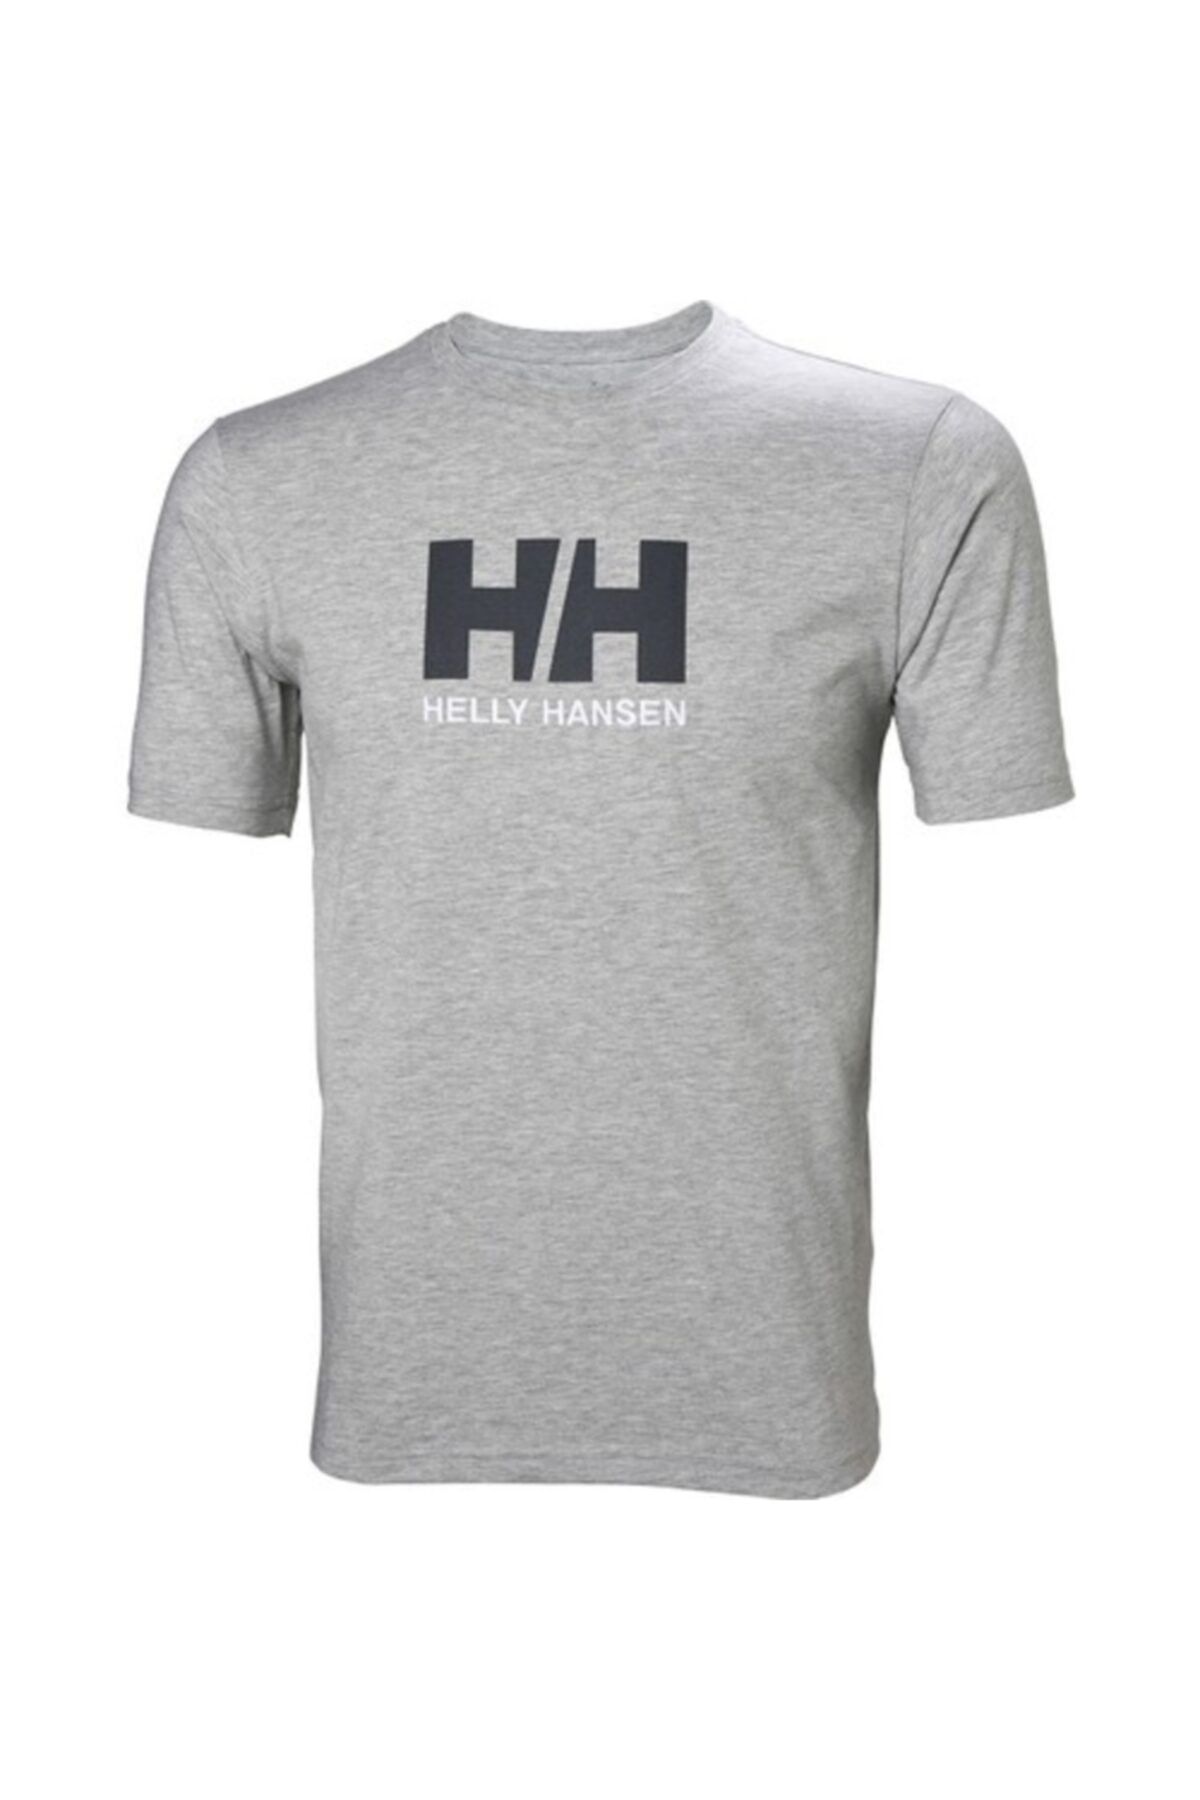 Helly Hansen Hh Logo Erkek T-shirt Gri Melanj